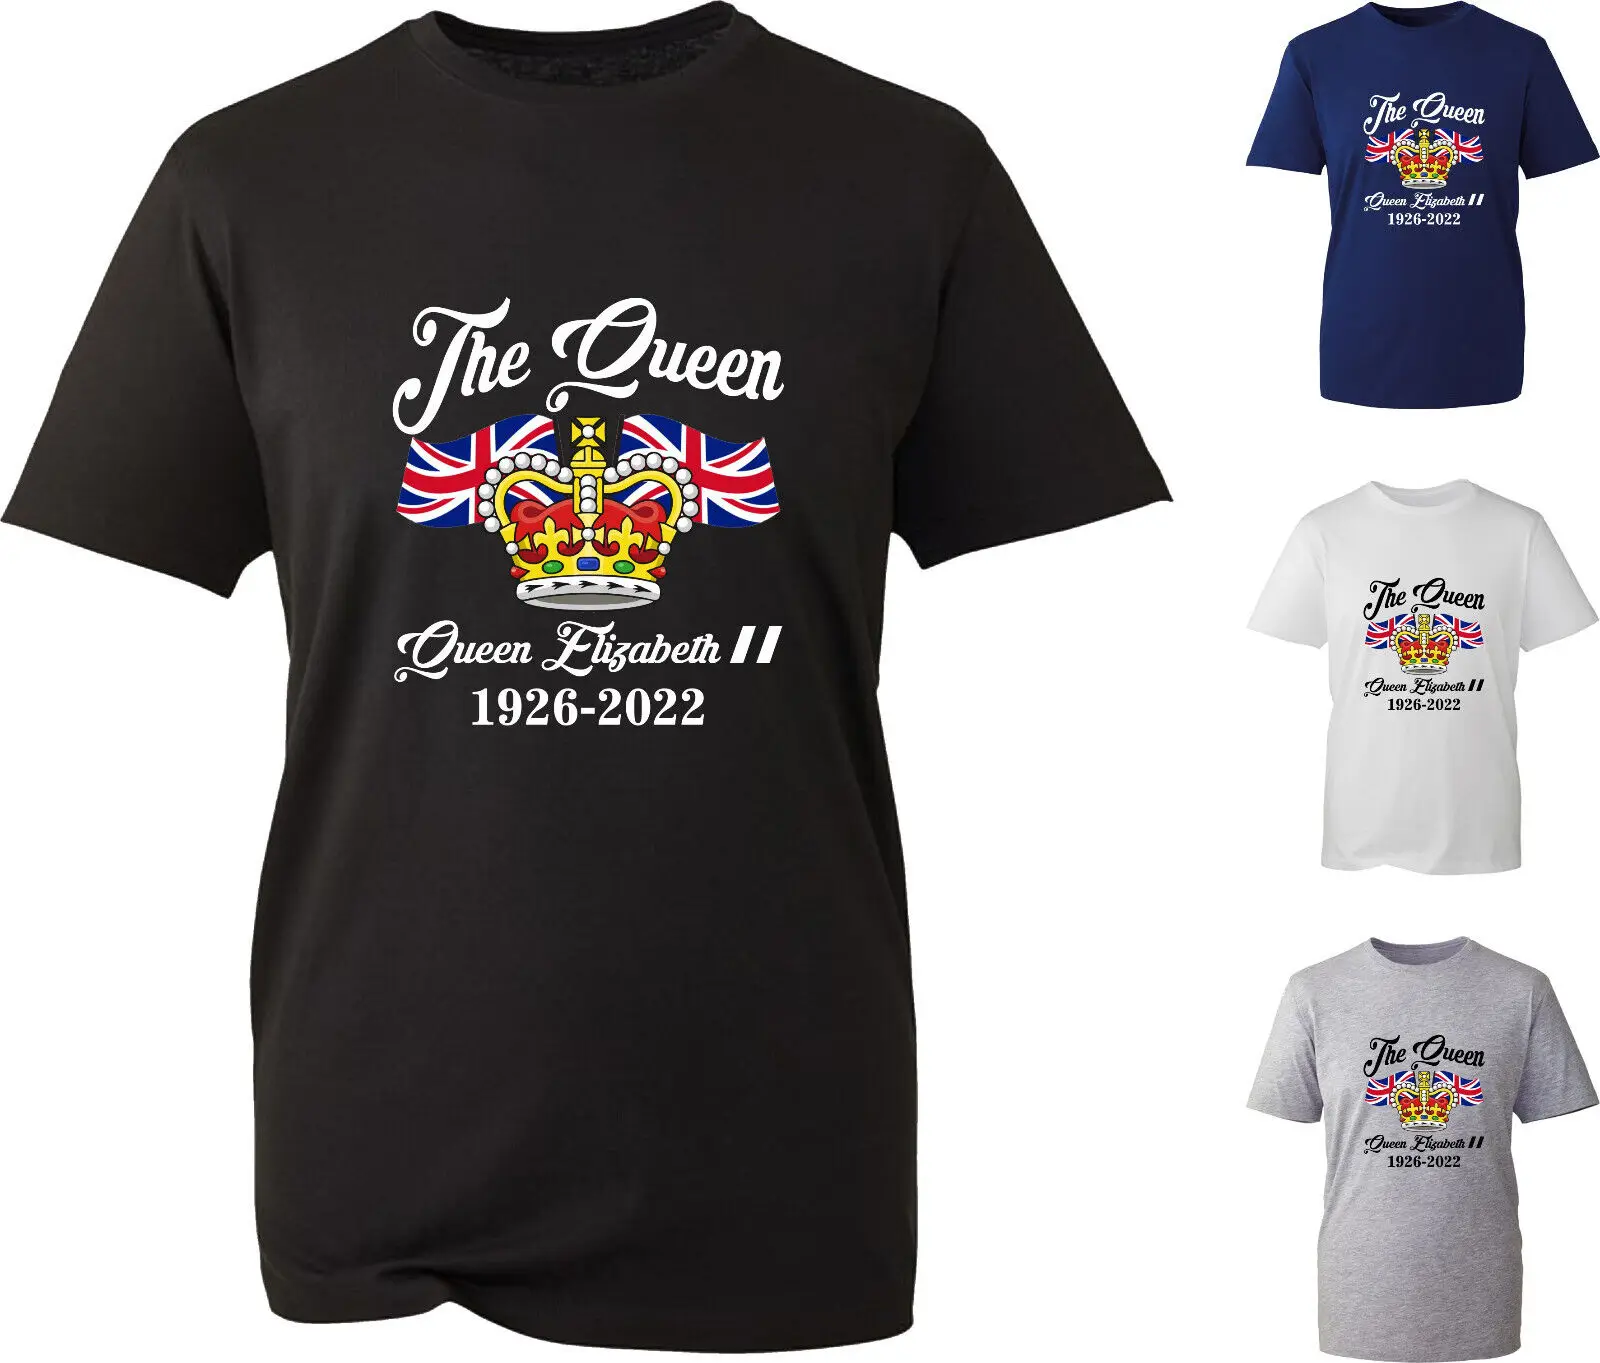 

The Queen Elizabeth II Memorial Uk Flag London Bridge T Shirt Short Sleeve Casual 100% Cotton O-Neck Mens T-shirt Size S-3XL